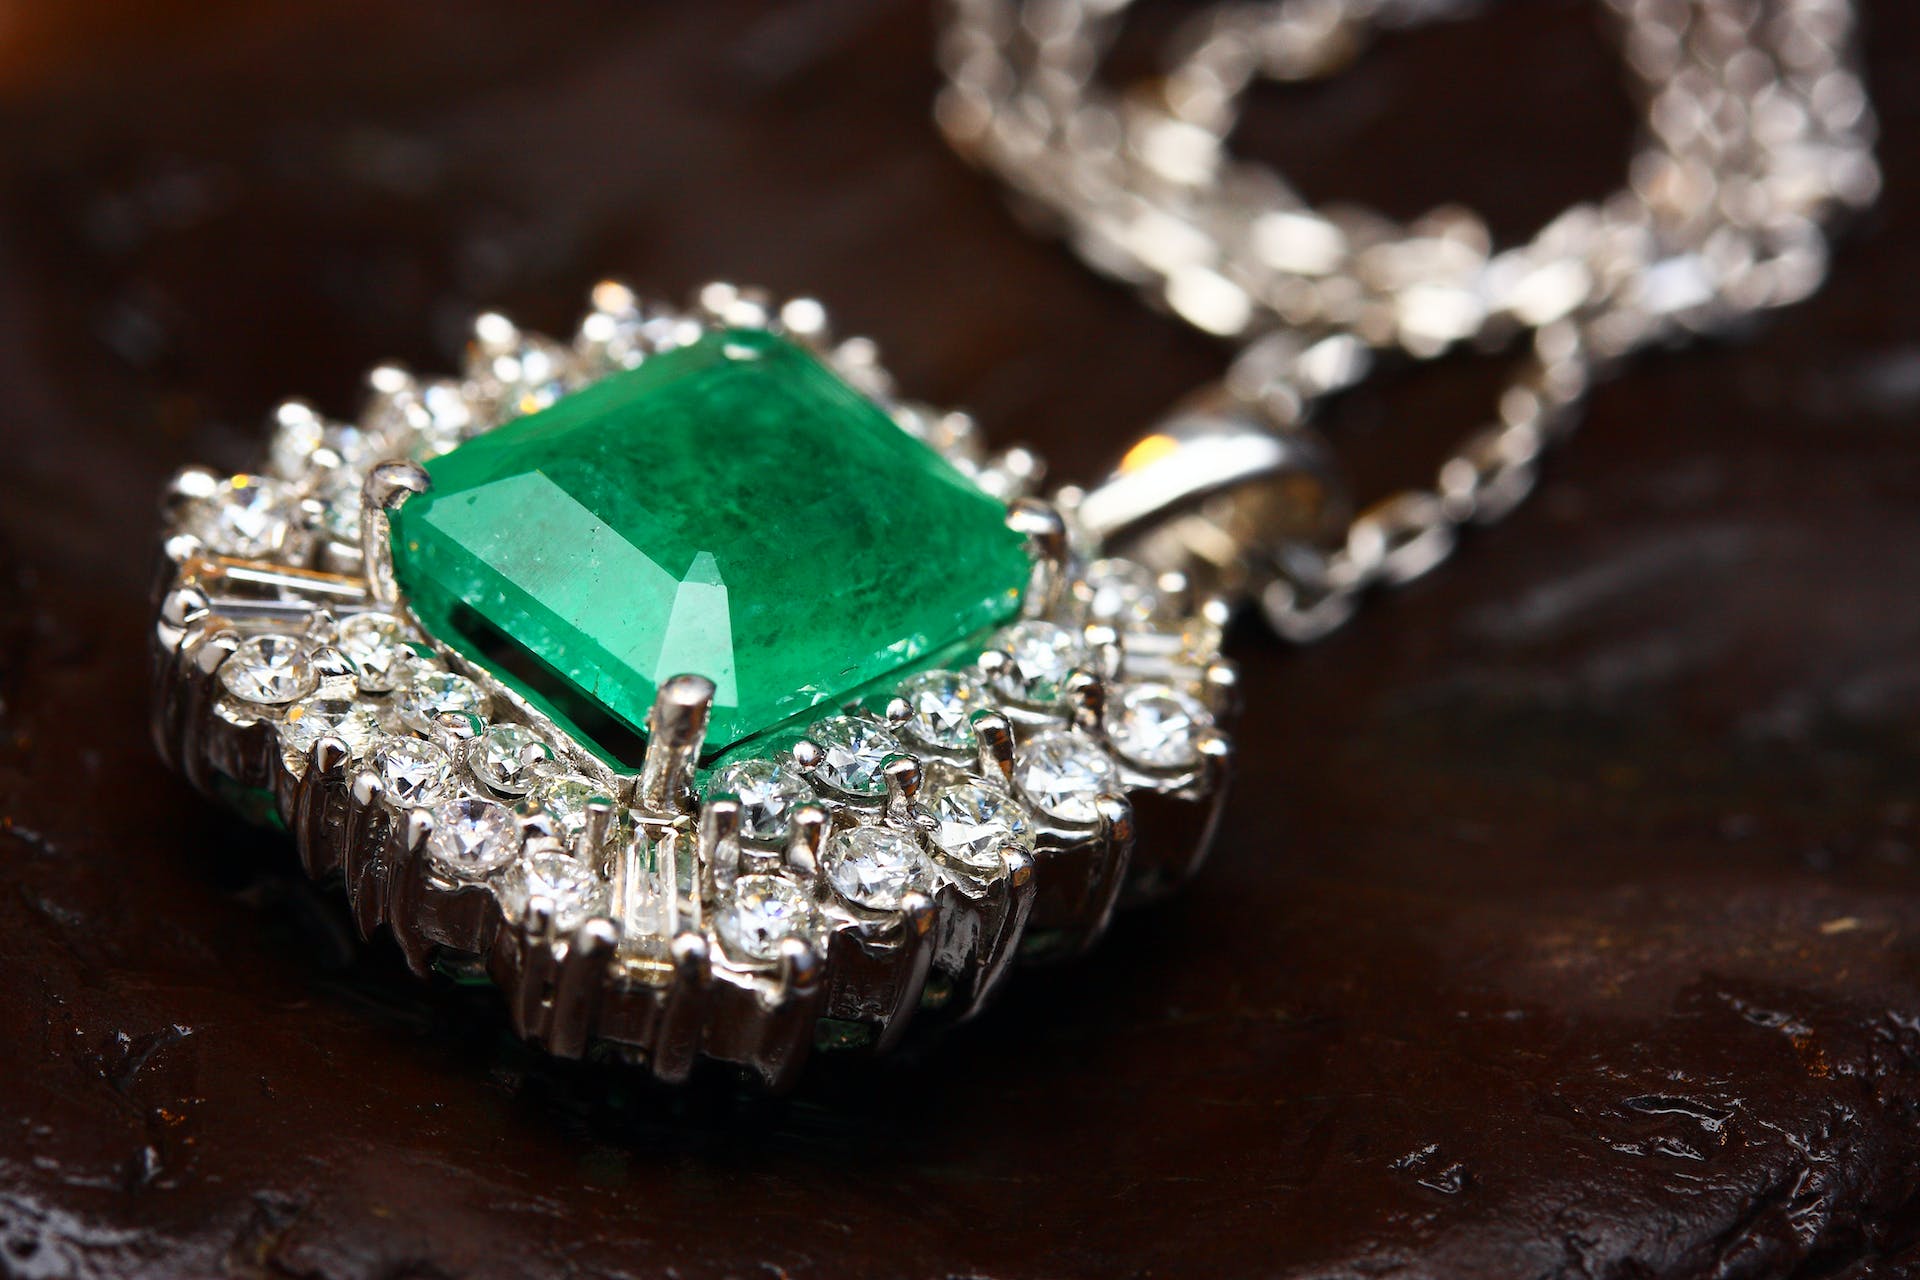 Emerald necklace | Source: Pexels